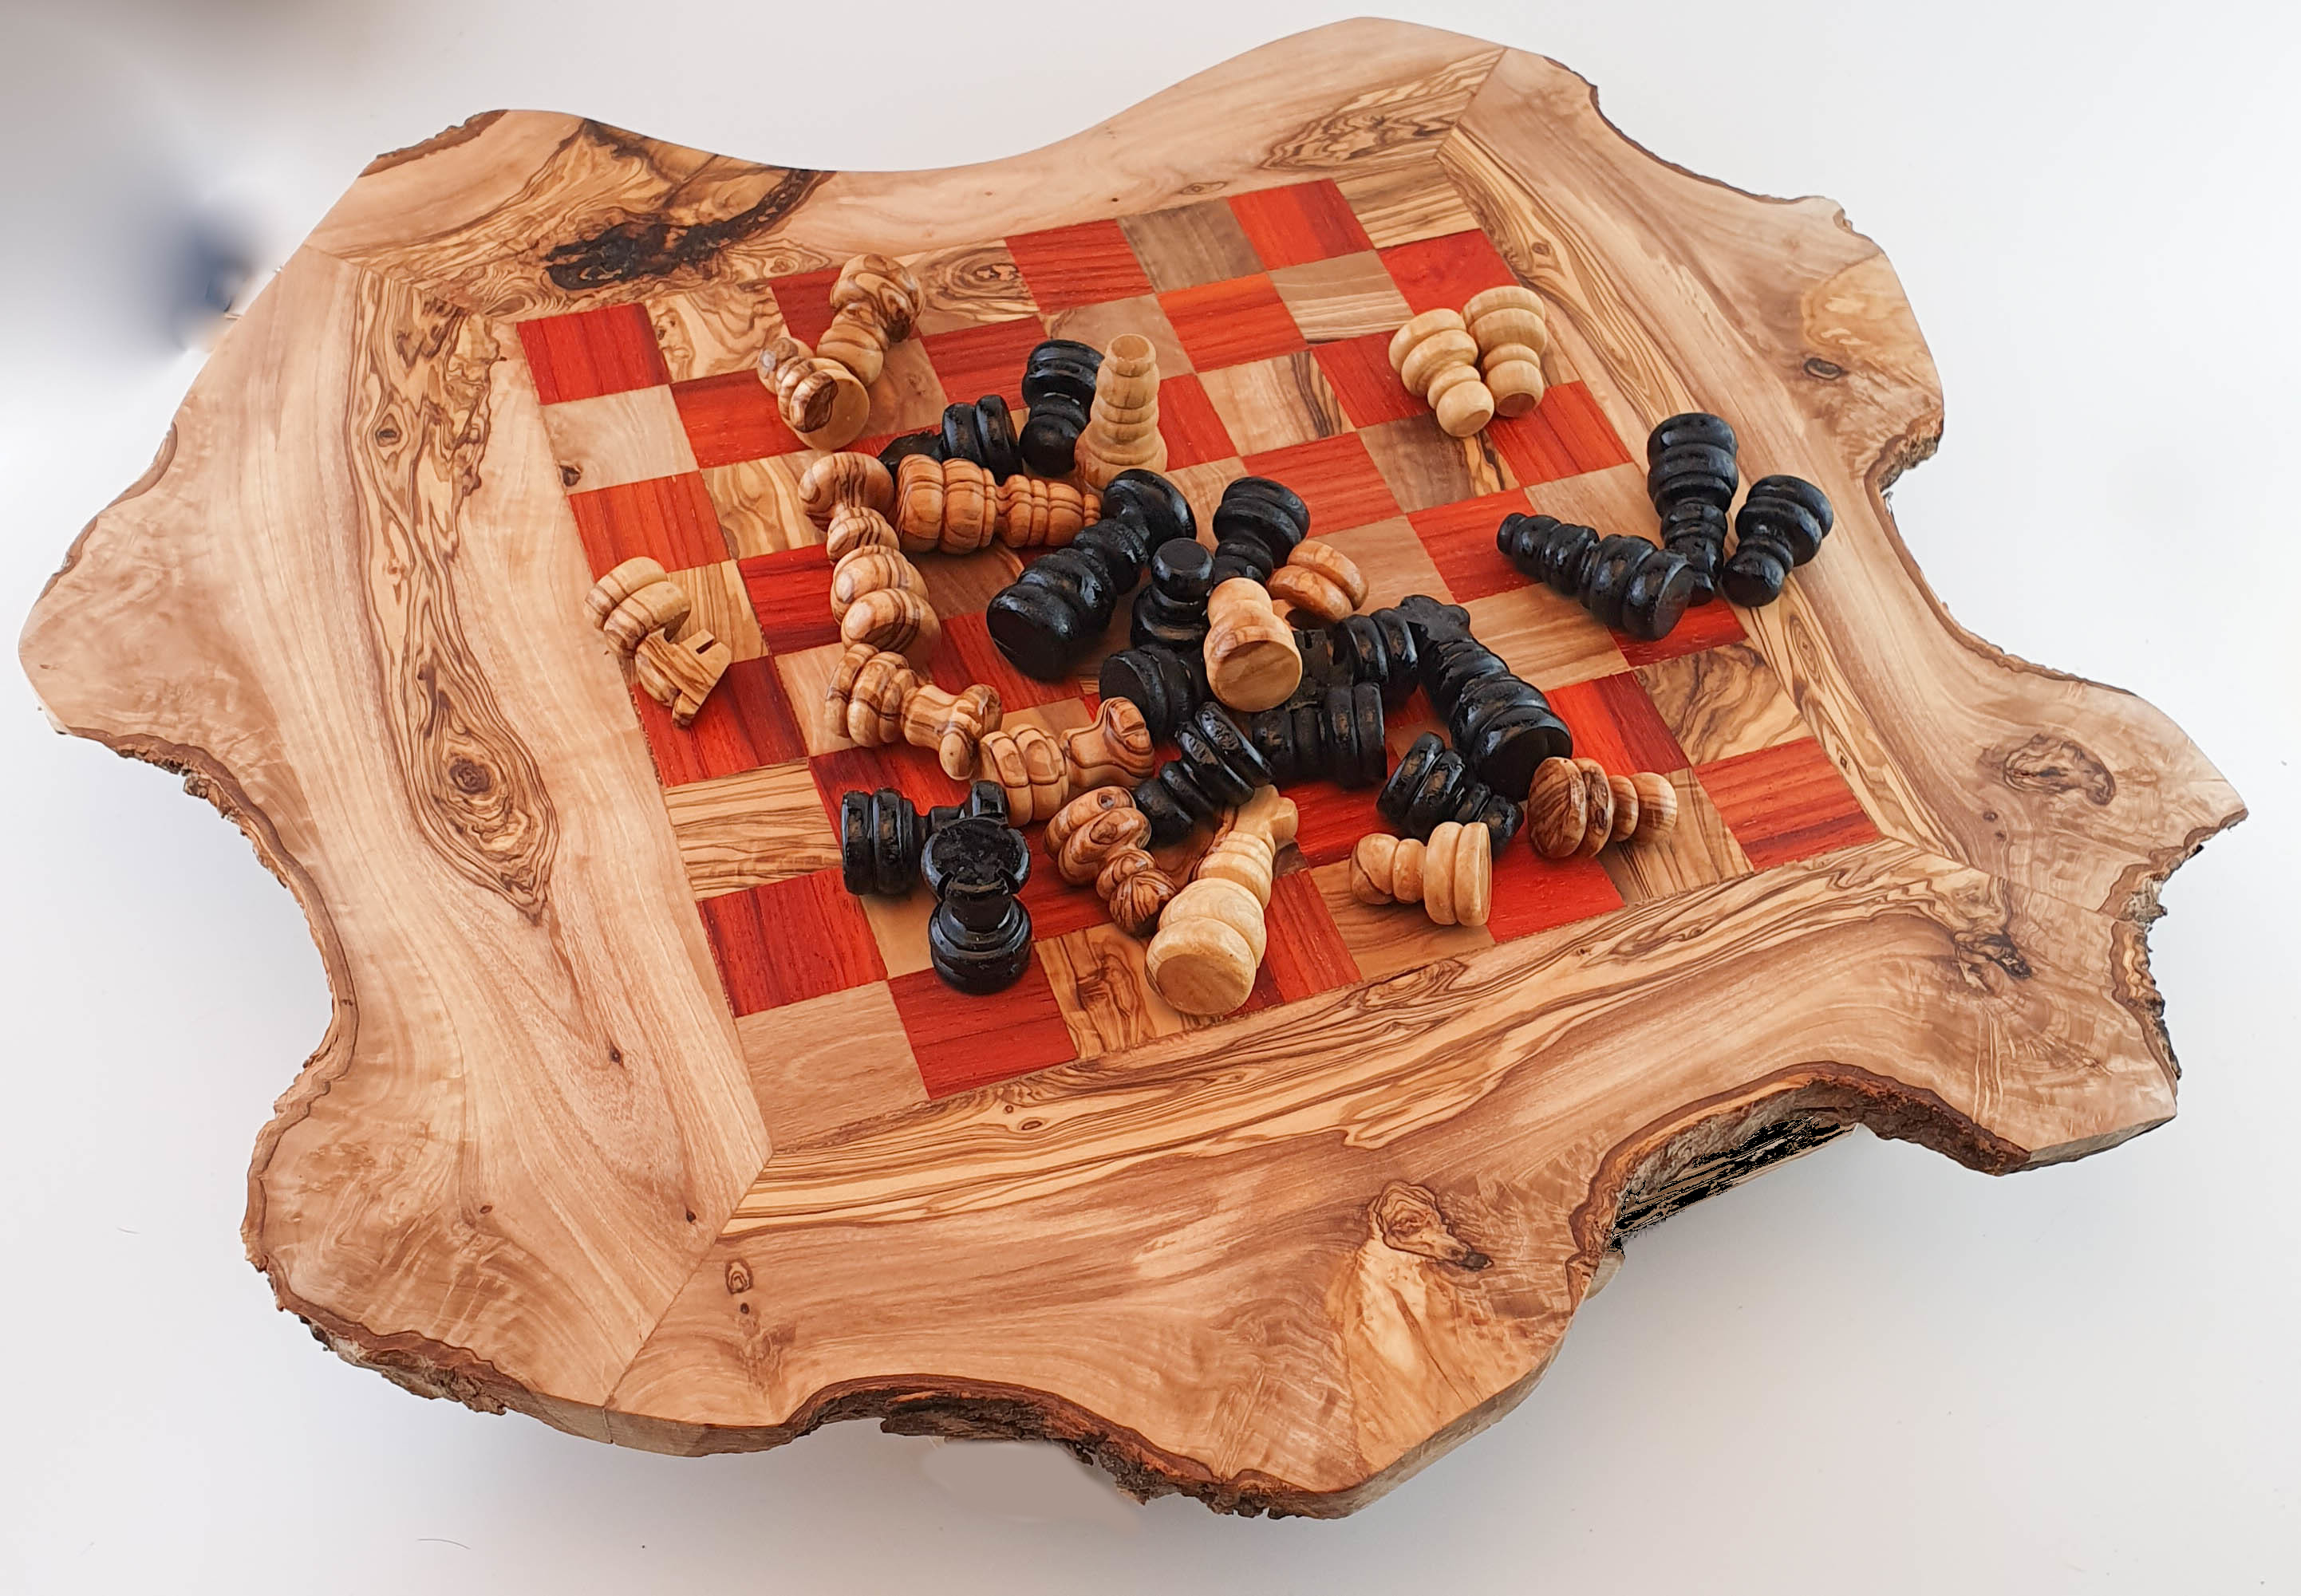 Juego de ajedrez rústico de madera de olivo de aproximadamente 42cm.